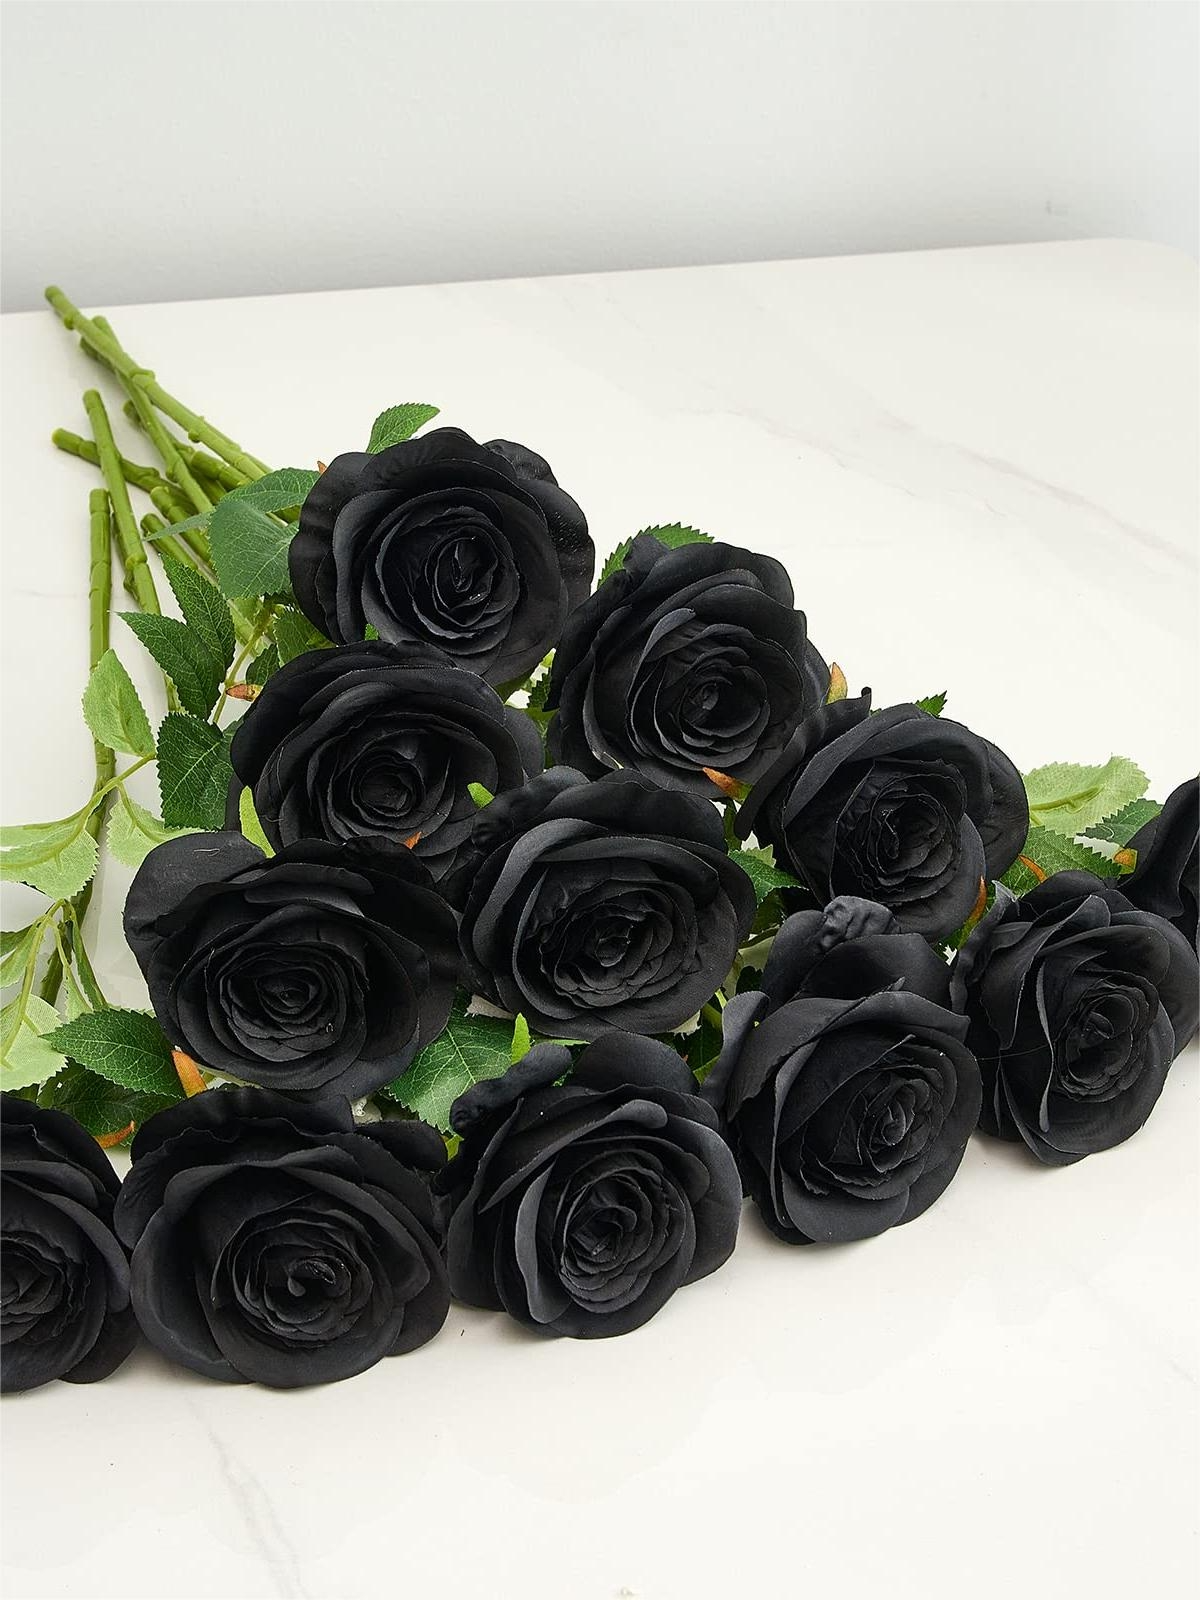 Artificial Rose Flowers With Long Stems Wedding Bouquet Centerpieces Decorations HH8027